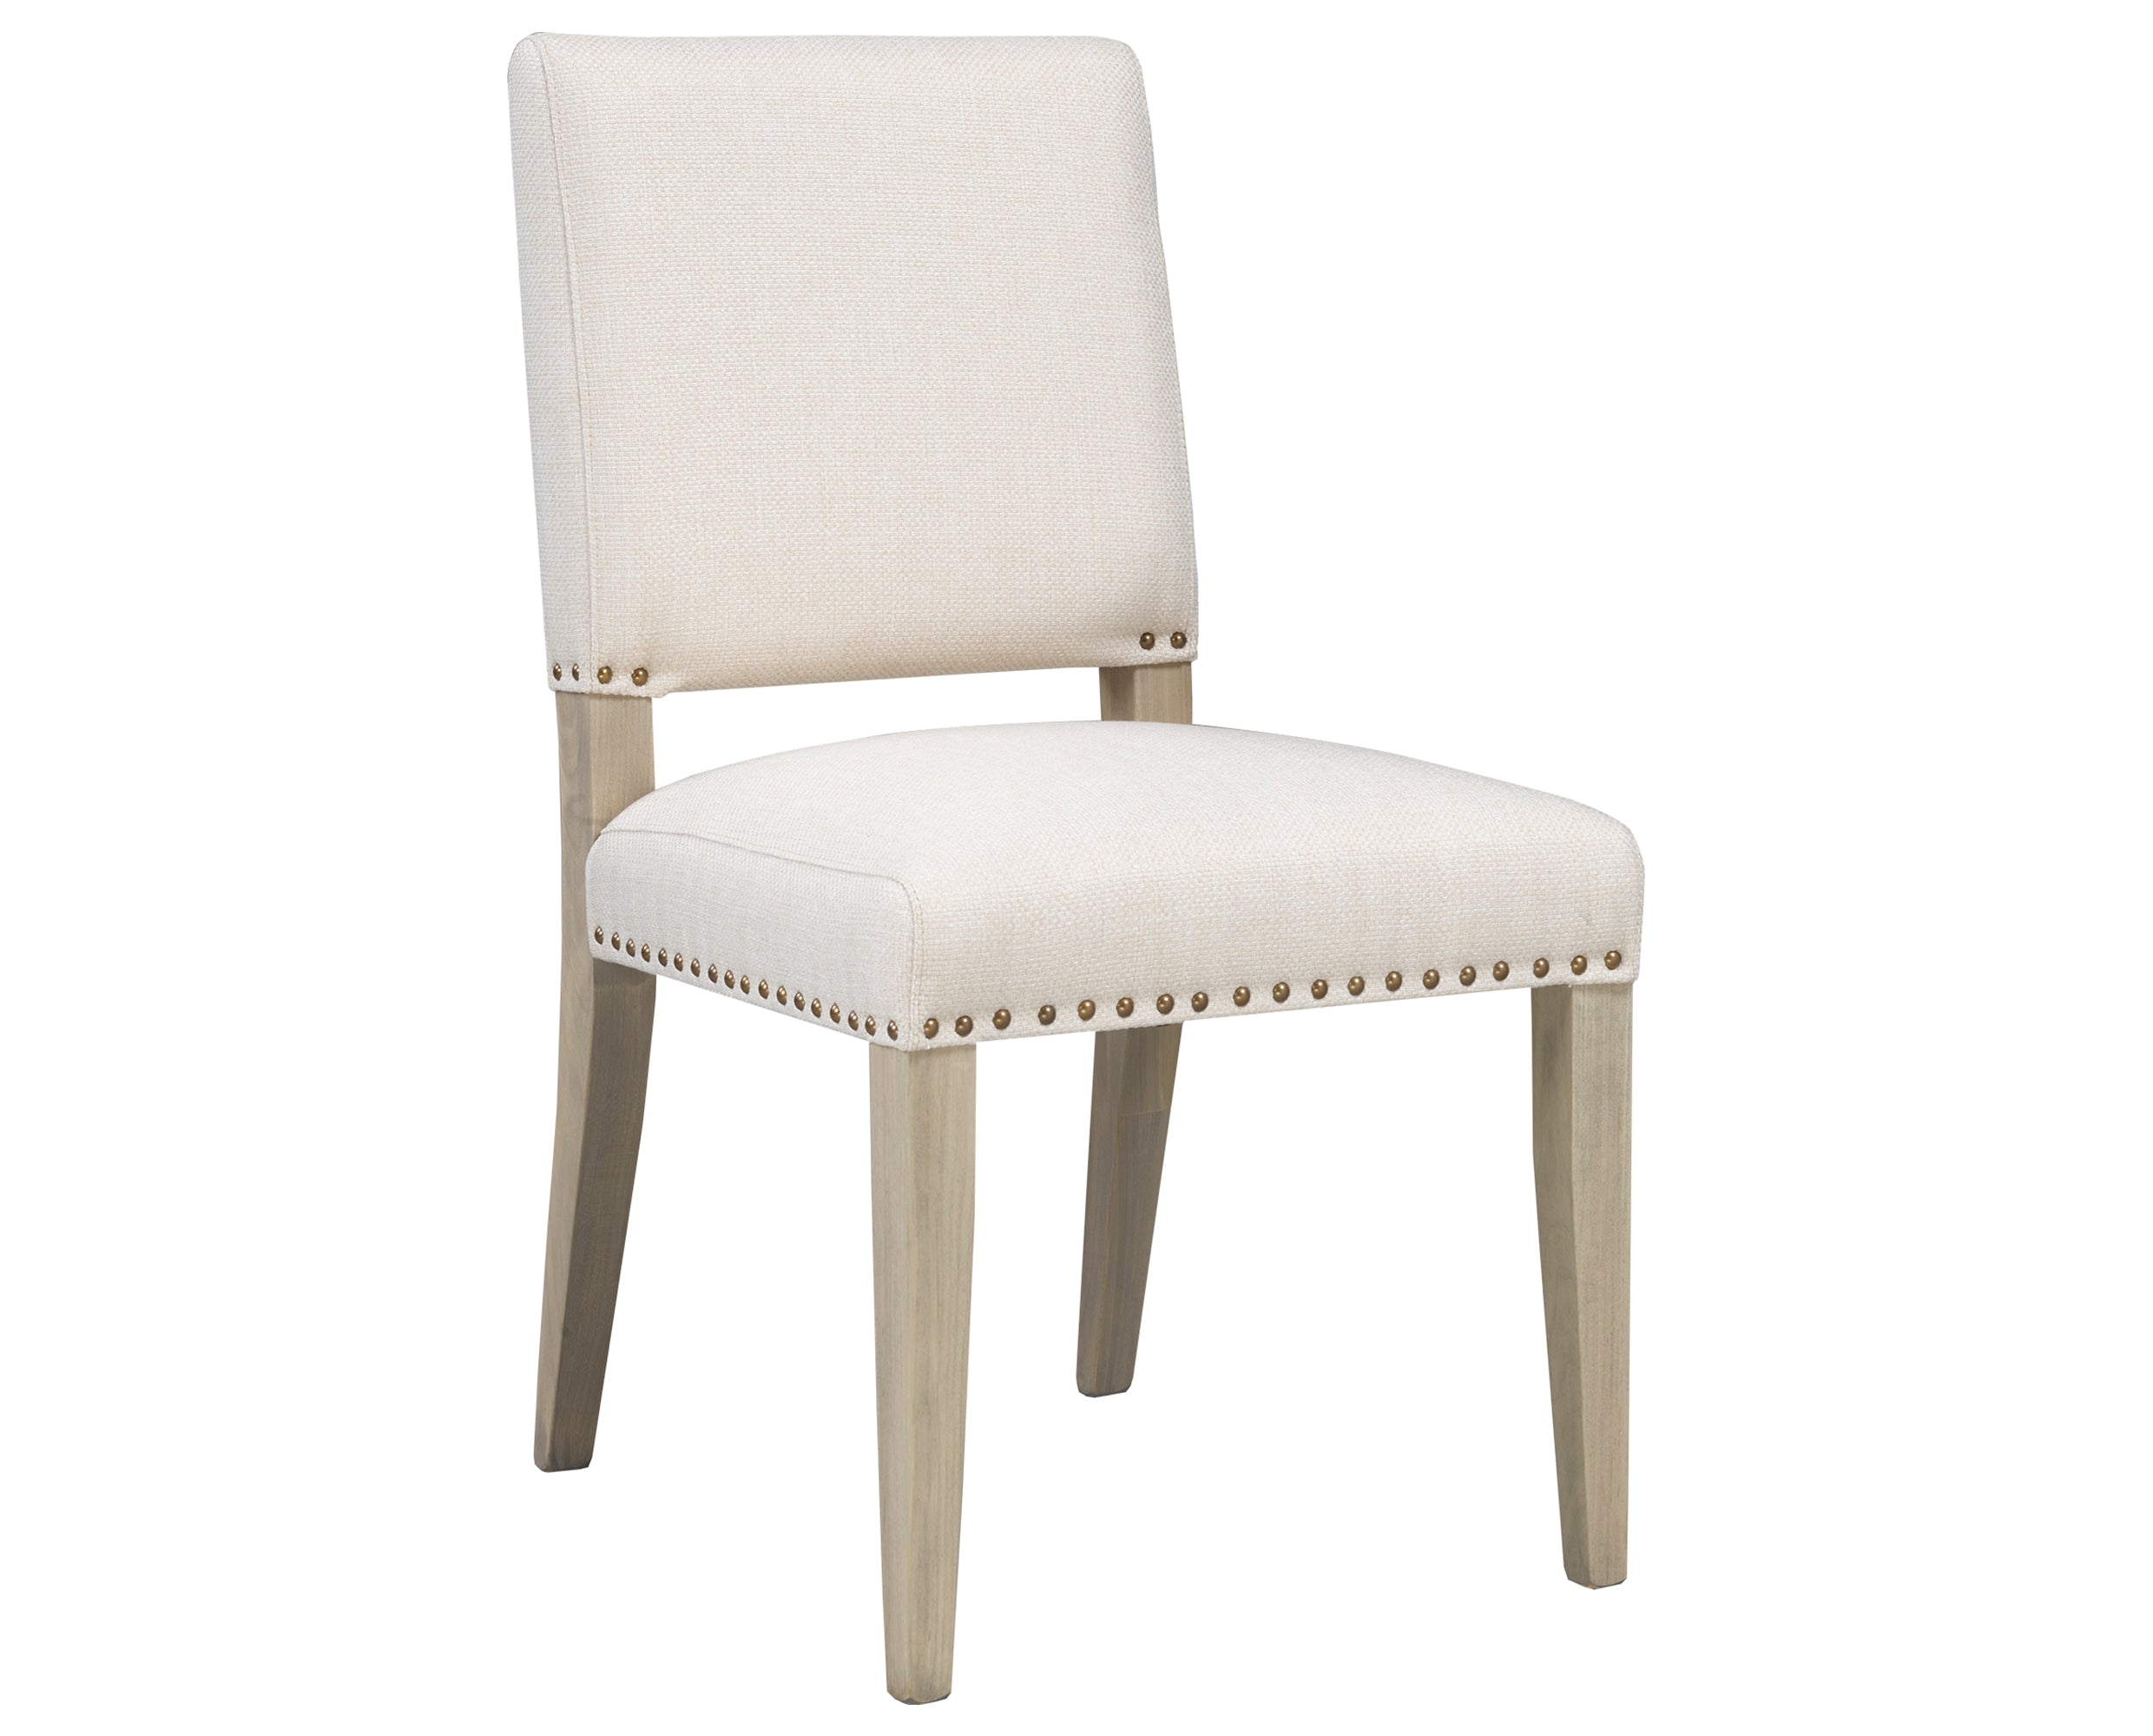 Chair as Shown | Cardinal Woodcraft Salwick Dining Chair | Valley Ridge Furniture